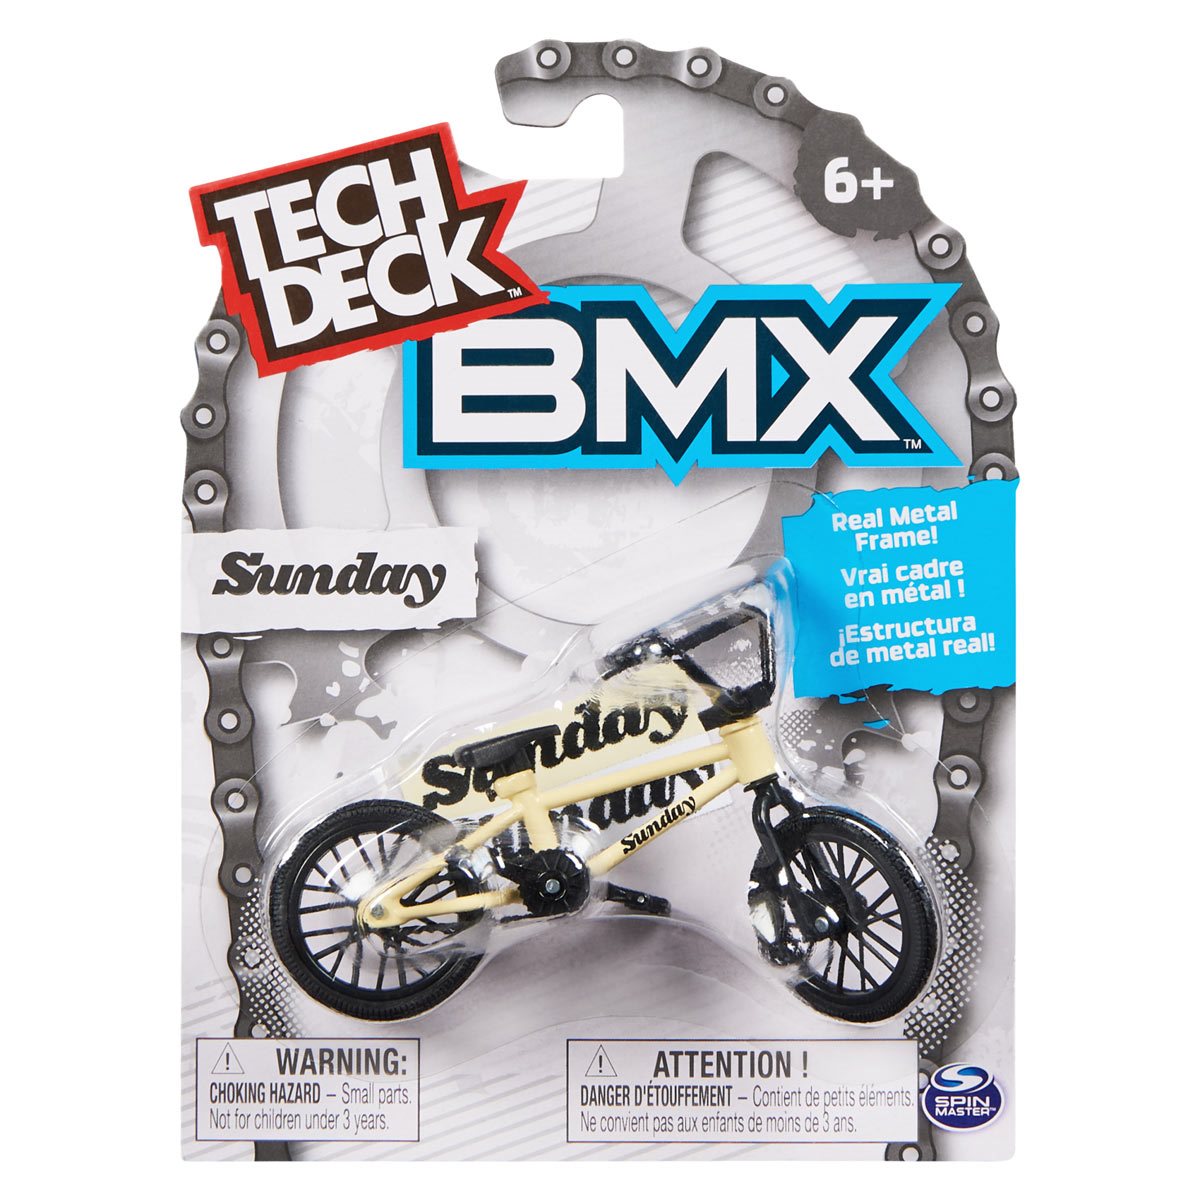 TECH DECK BMX BIKE SHOP PACK CULT MINI MODEL FINGER TOY GIFT COLLECTION